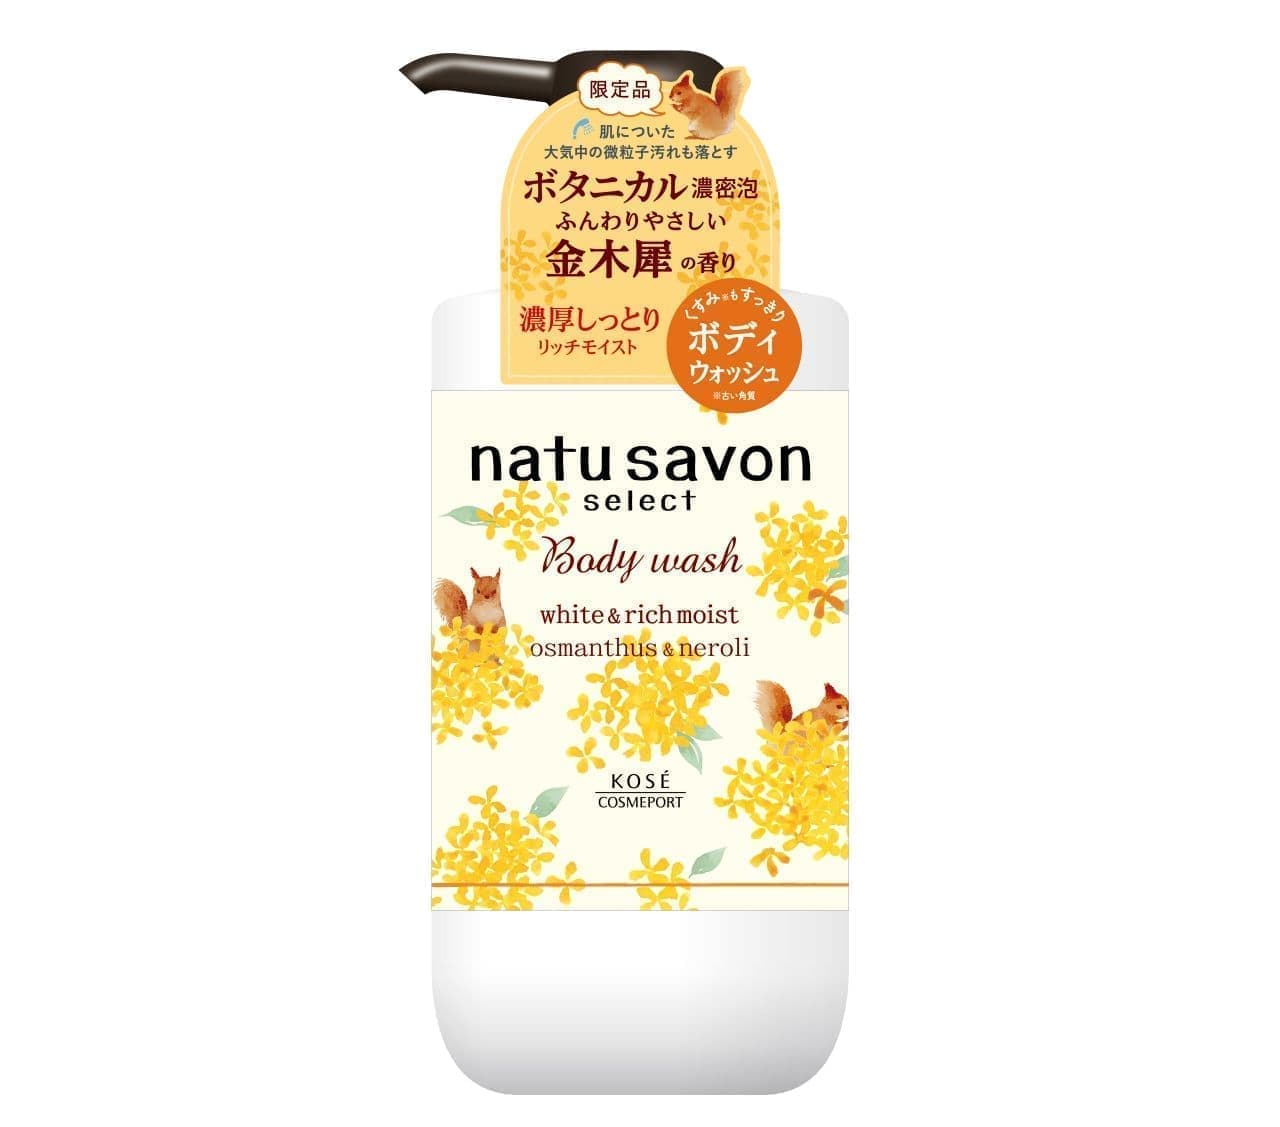 Softimo NatuSavon Select White Body Wash, Rich Moist, Kinmorisu Fragrance